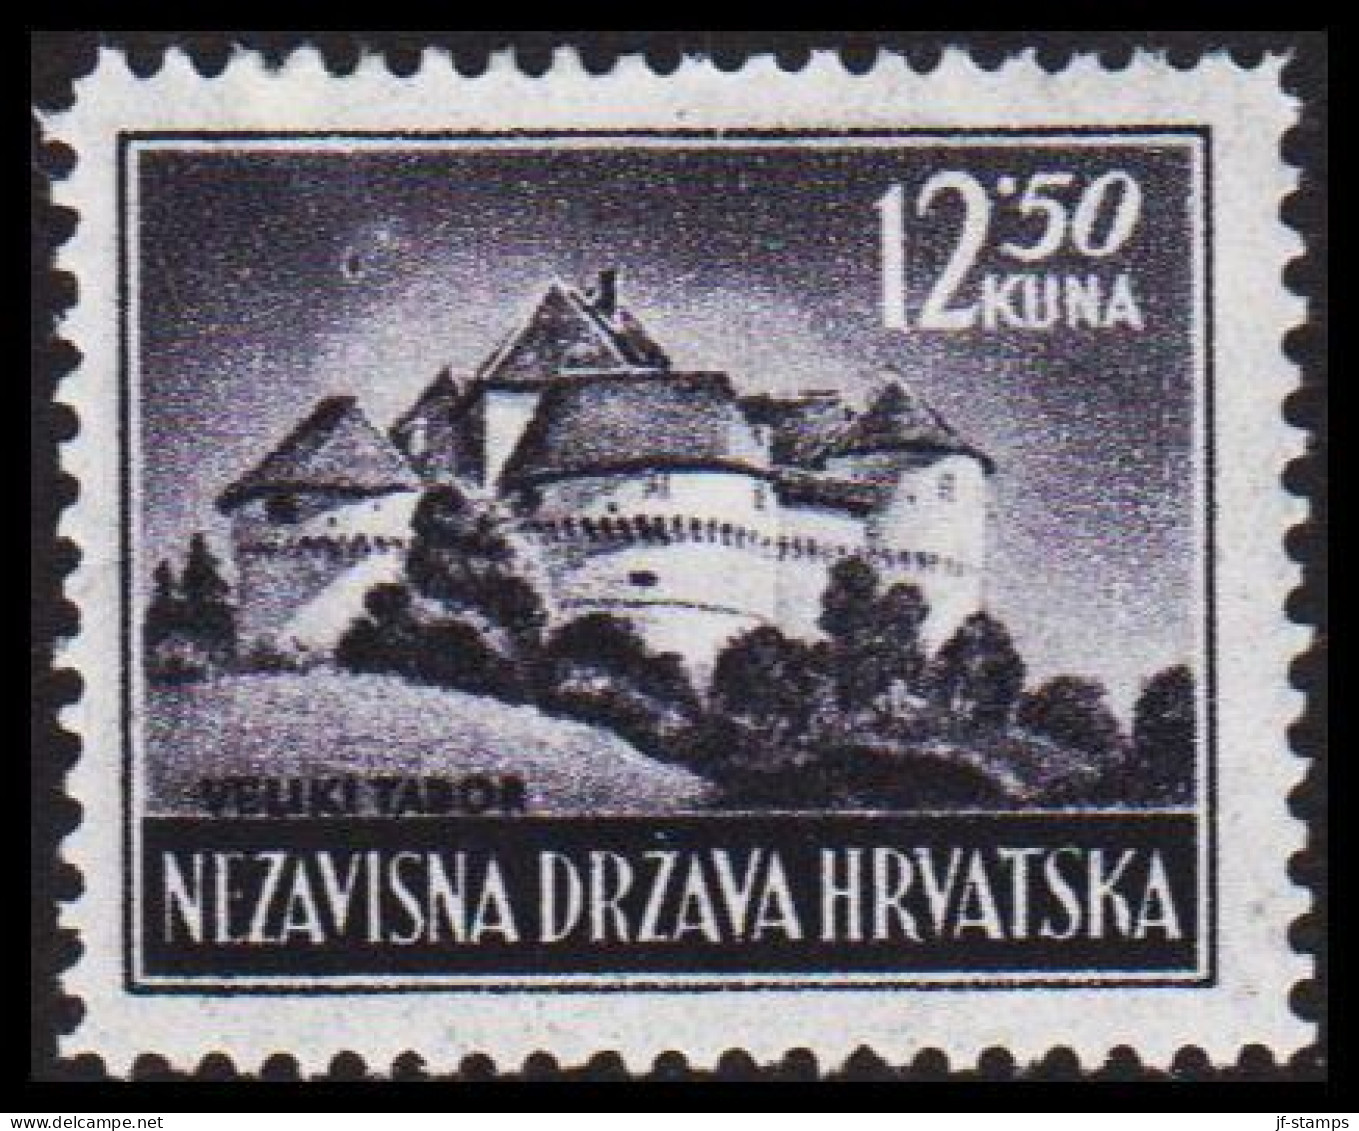 1943-1944. HRVATSKA Landscapes 12,50 KUNA. Hinged. (Michel 99) - JF546058 - Croatia